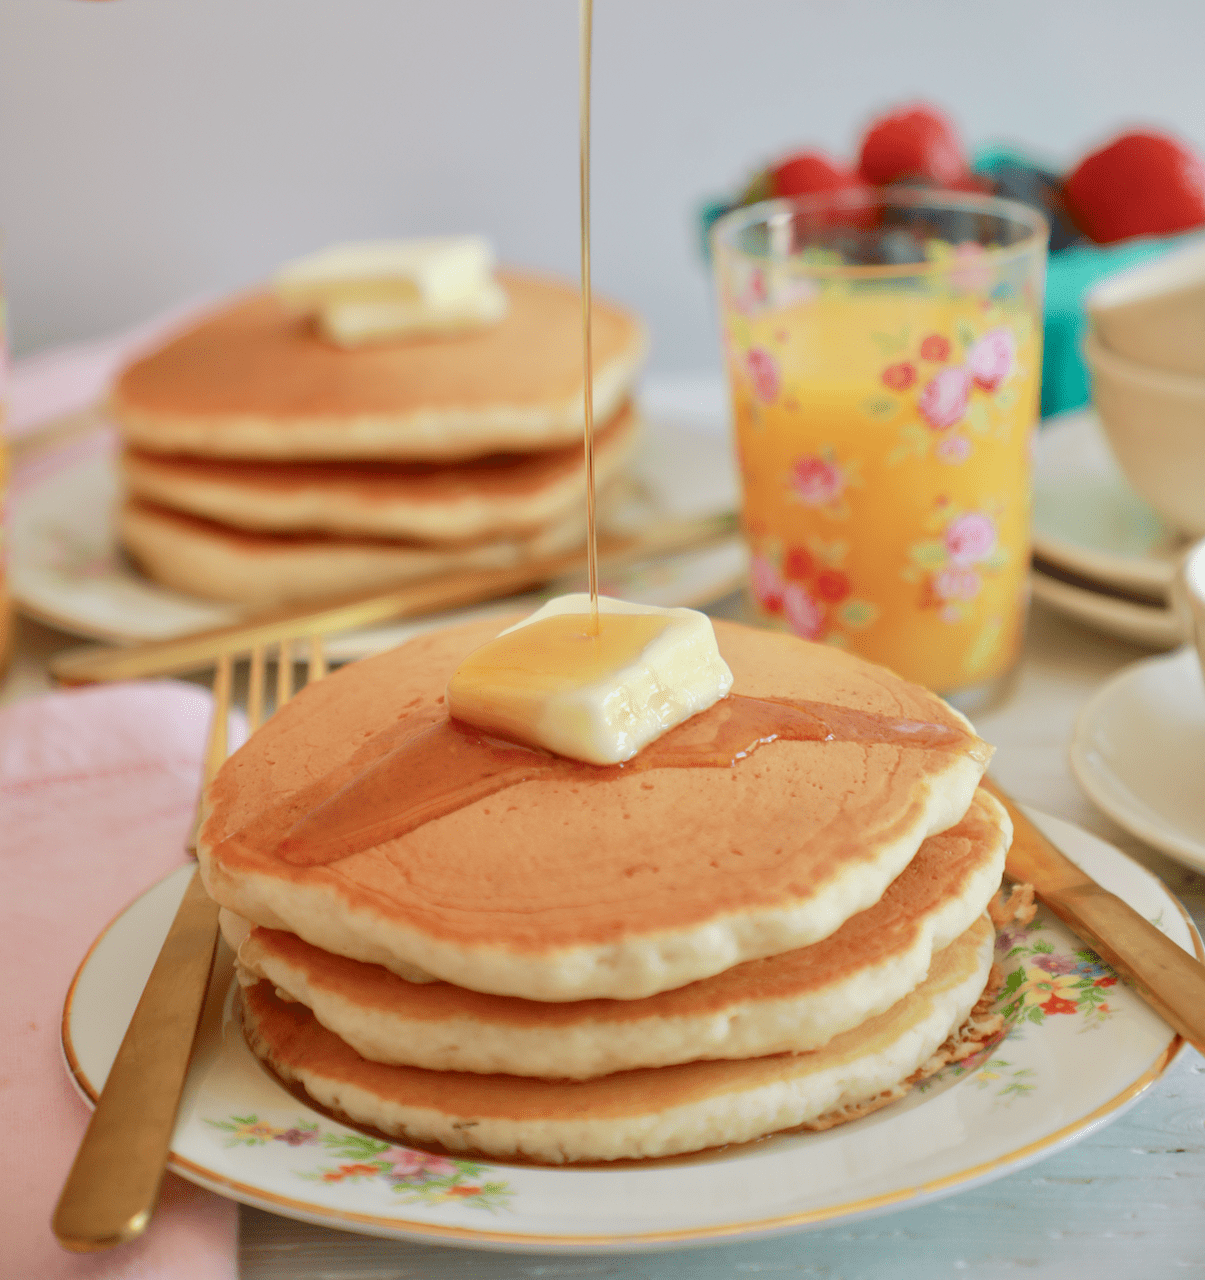 https://www.biggerbolderbaking.com/wp-content/uploads/2014/03/Perfect-Buttermilk-Pancake-Recipe2.png